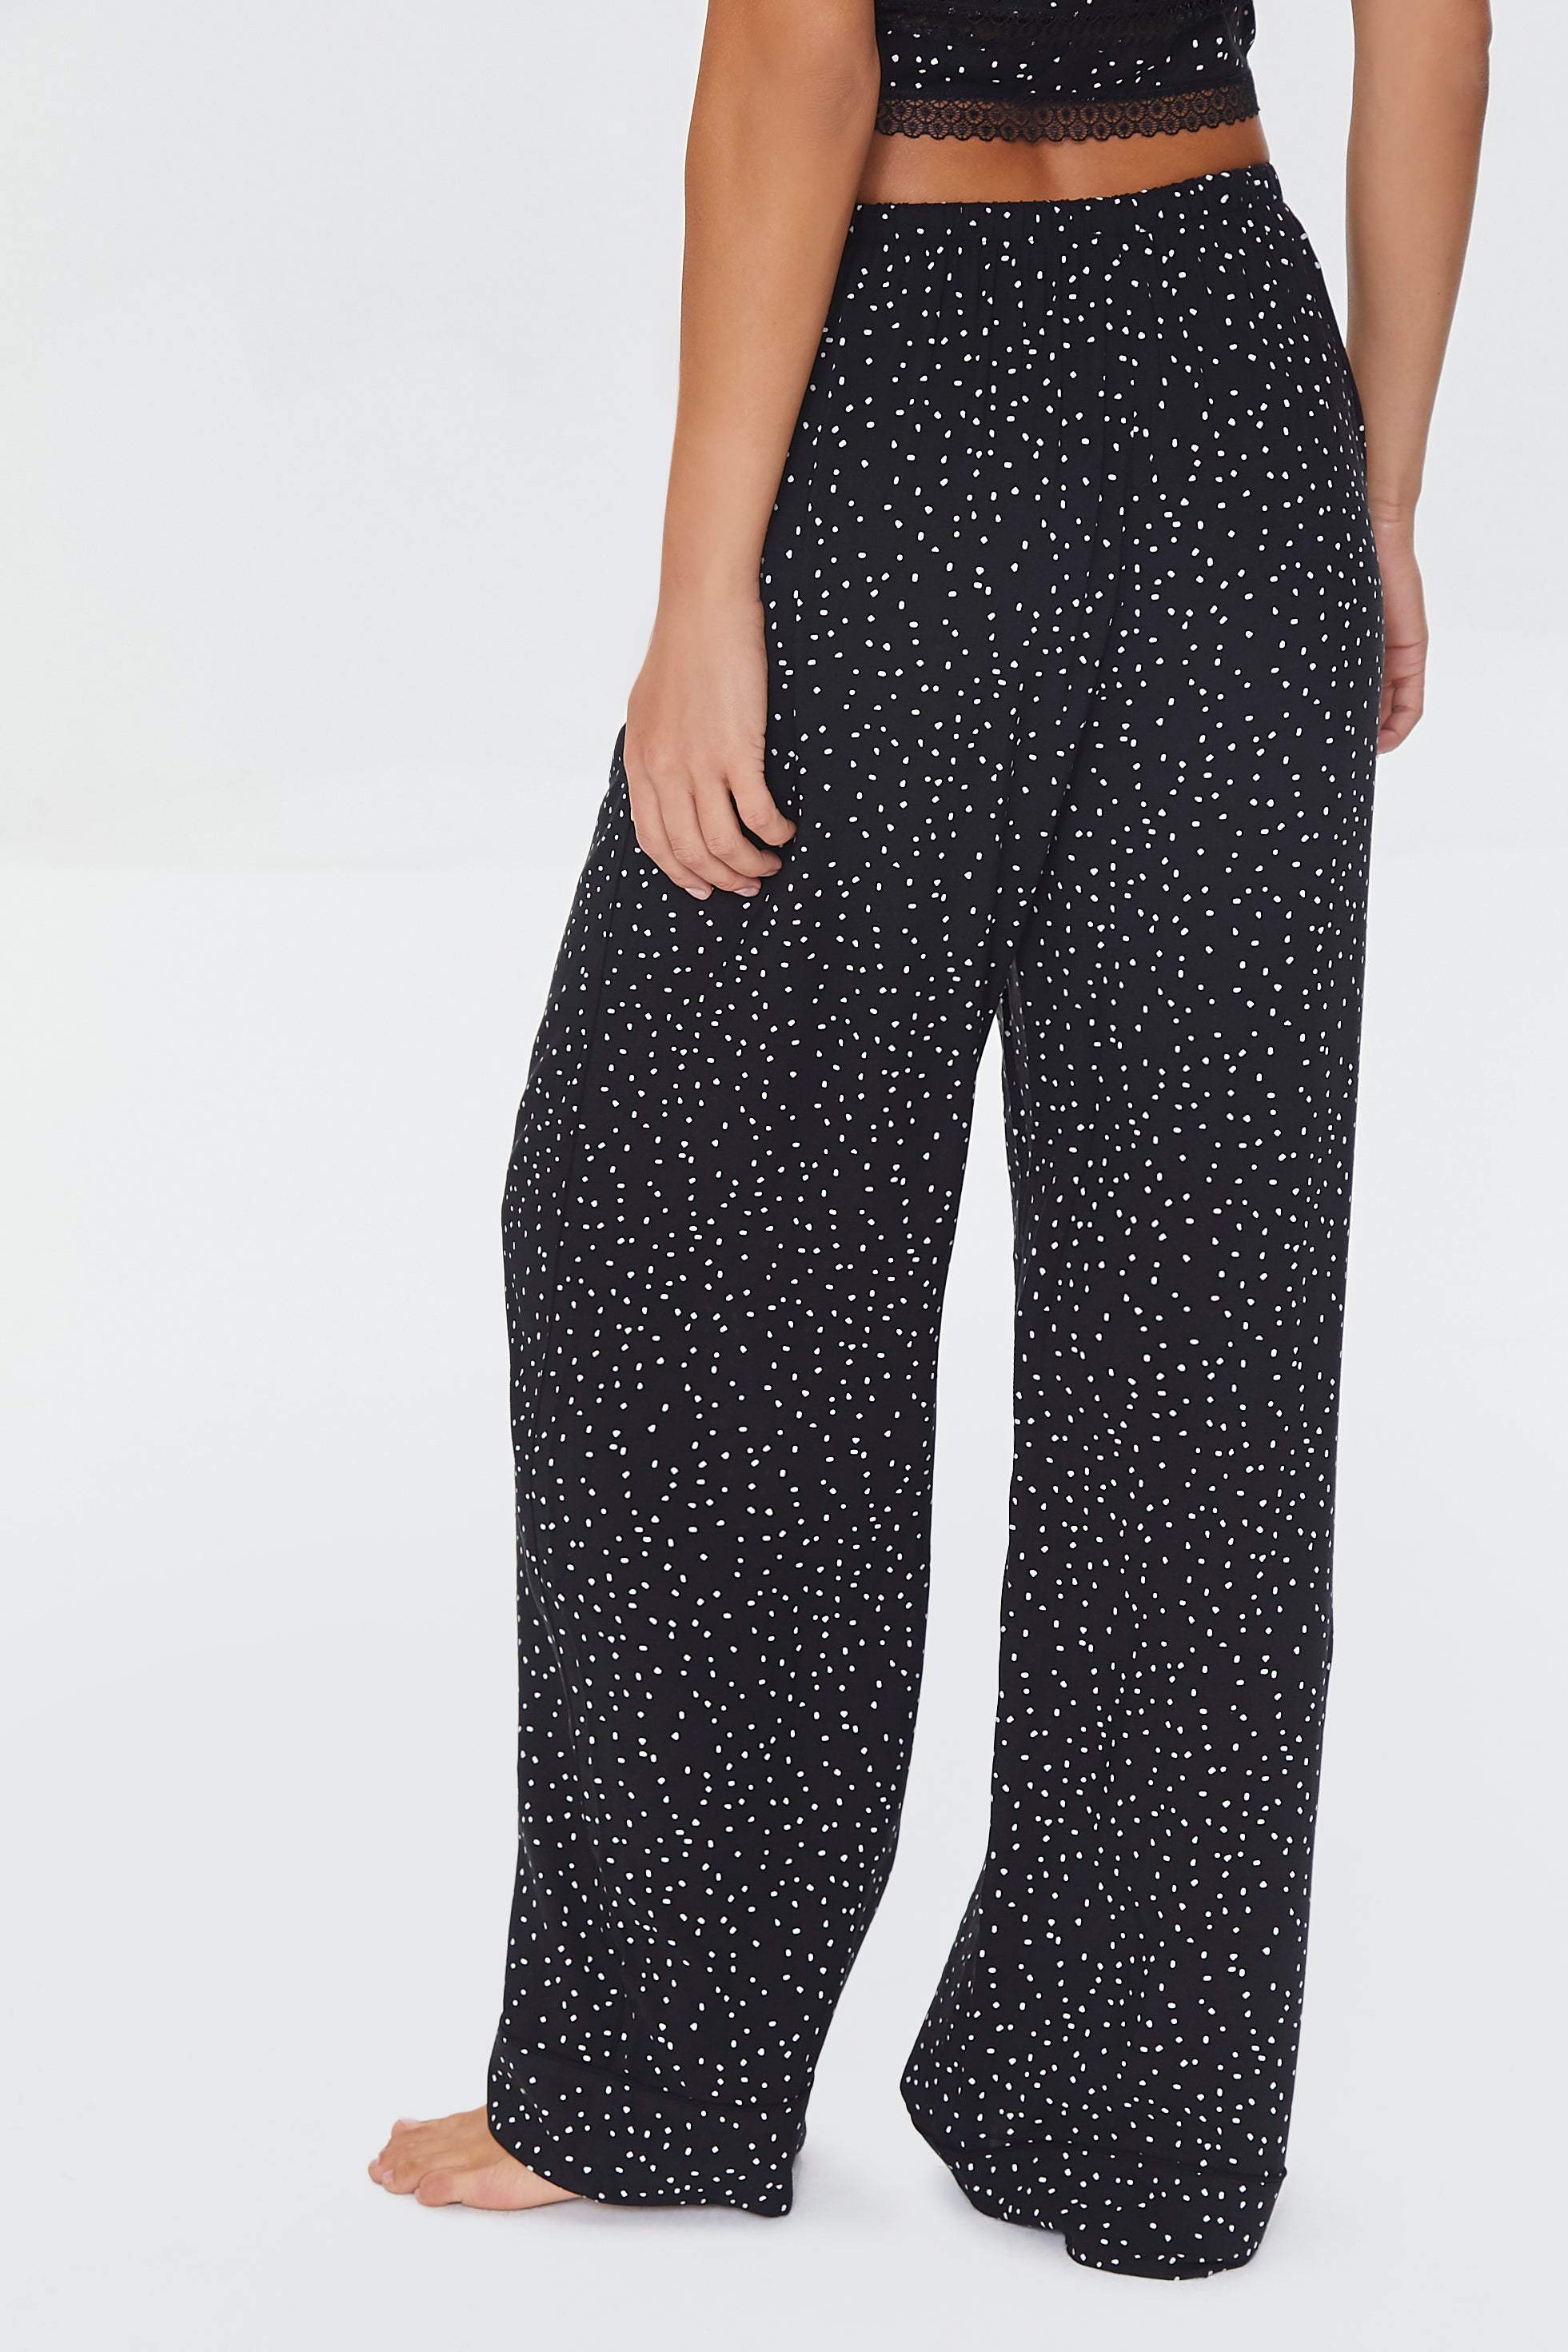 Blackwhite Speckled Drawstring Pajama Pants 3